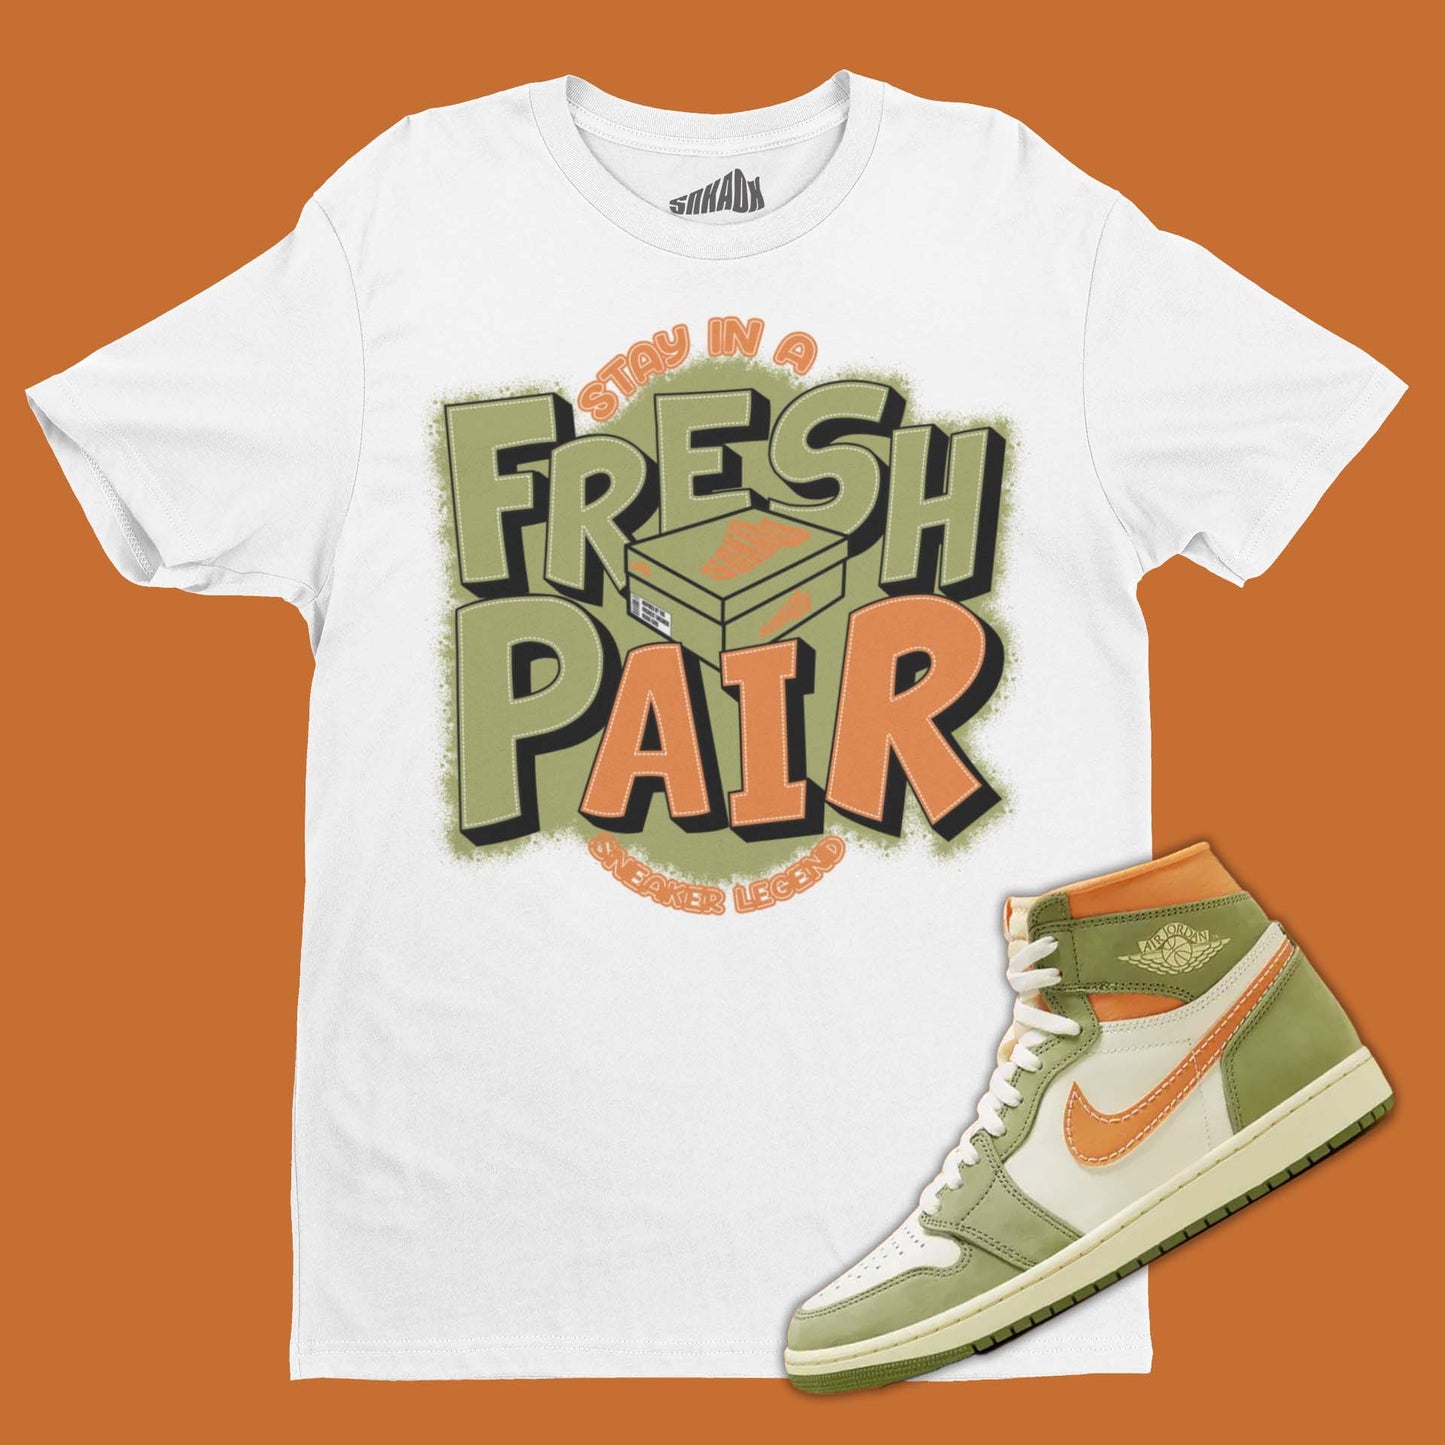 Stay In A Fresh Pair T-Shirt Matching Air Jordan 1 High OG Celadon